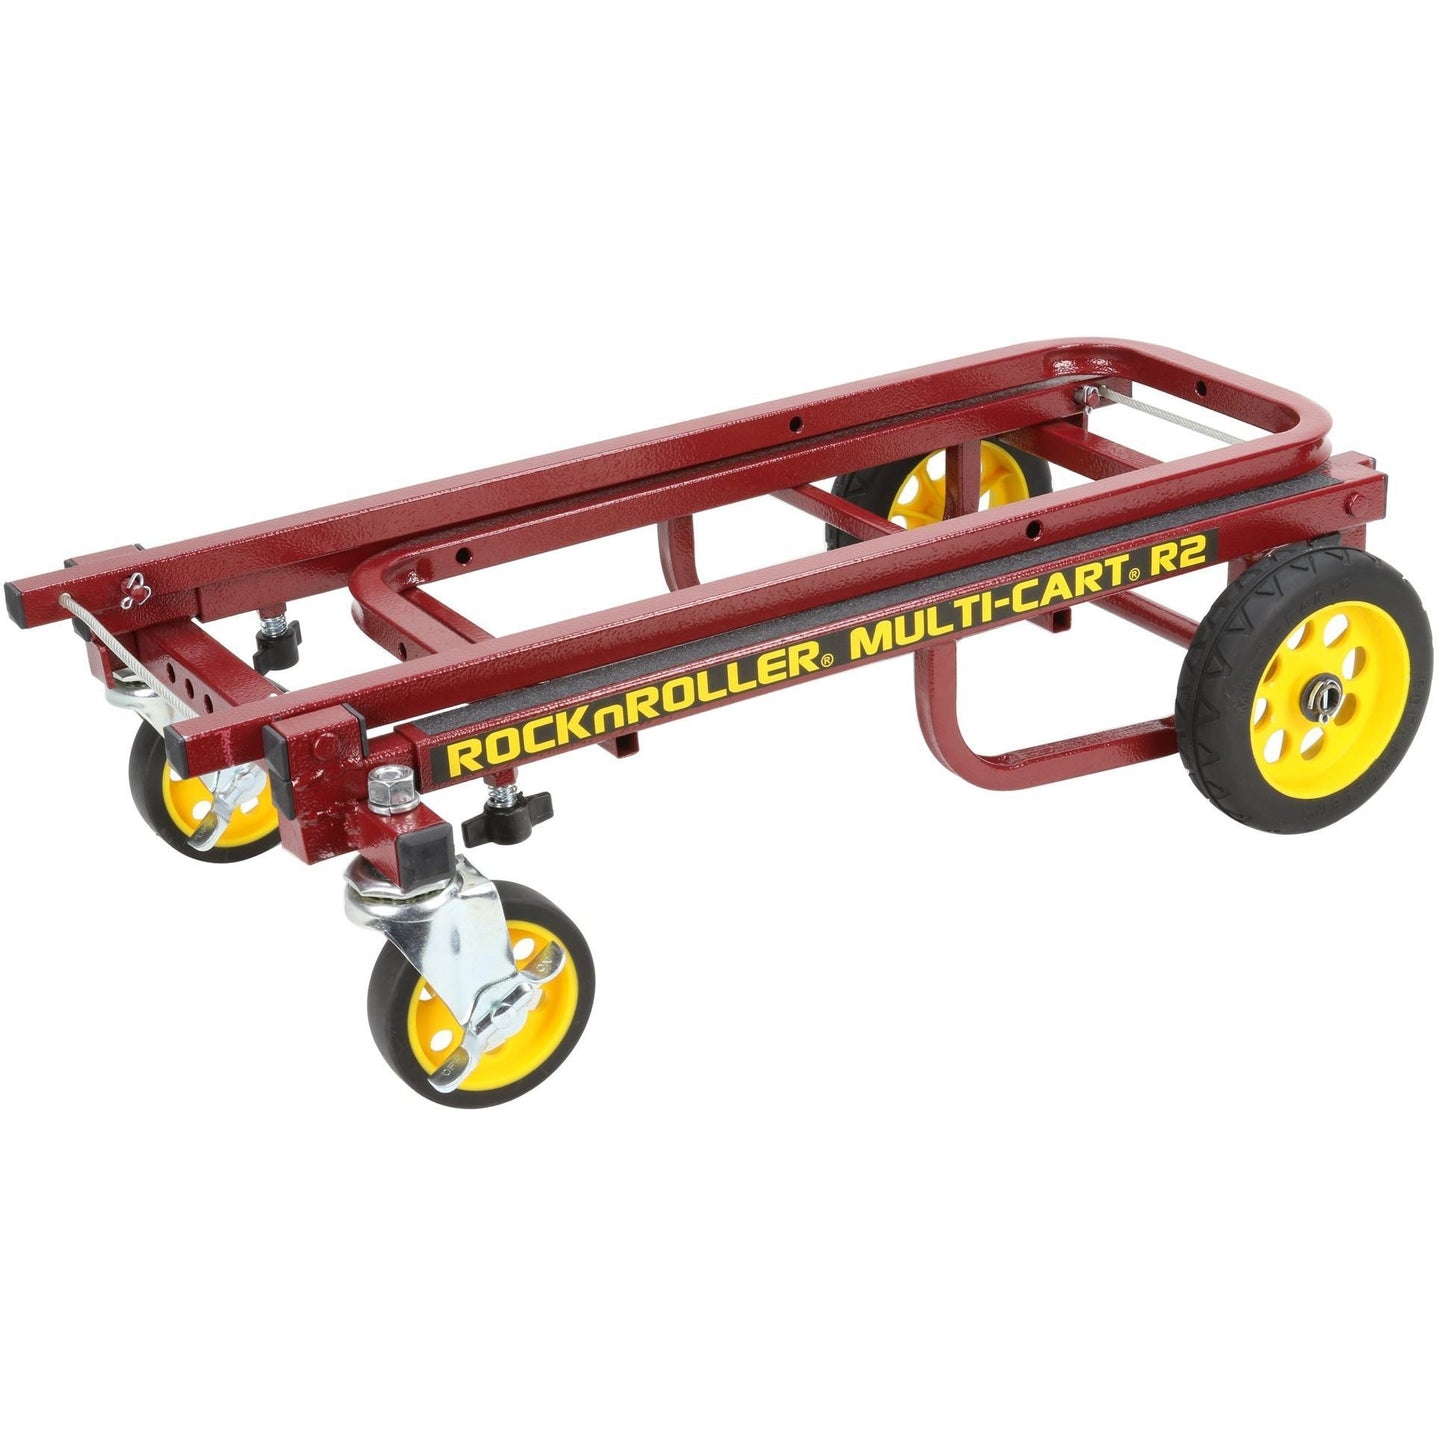 RocknRoller R2RT Multi-Cart, Red